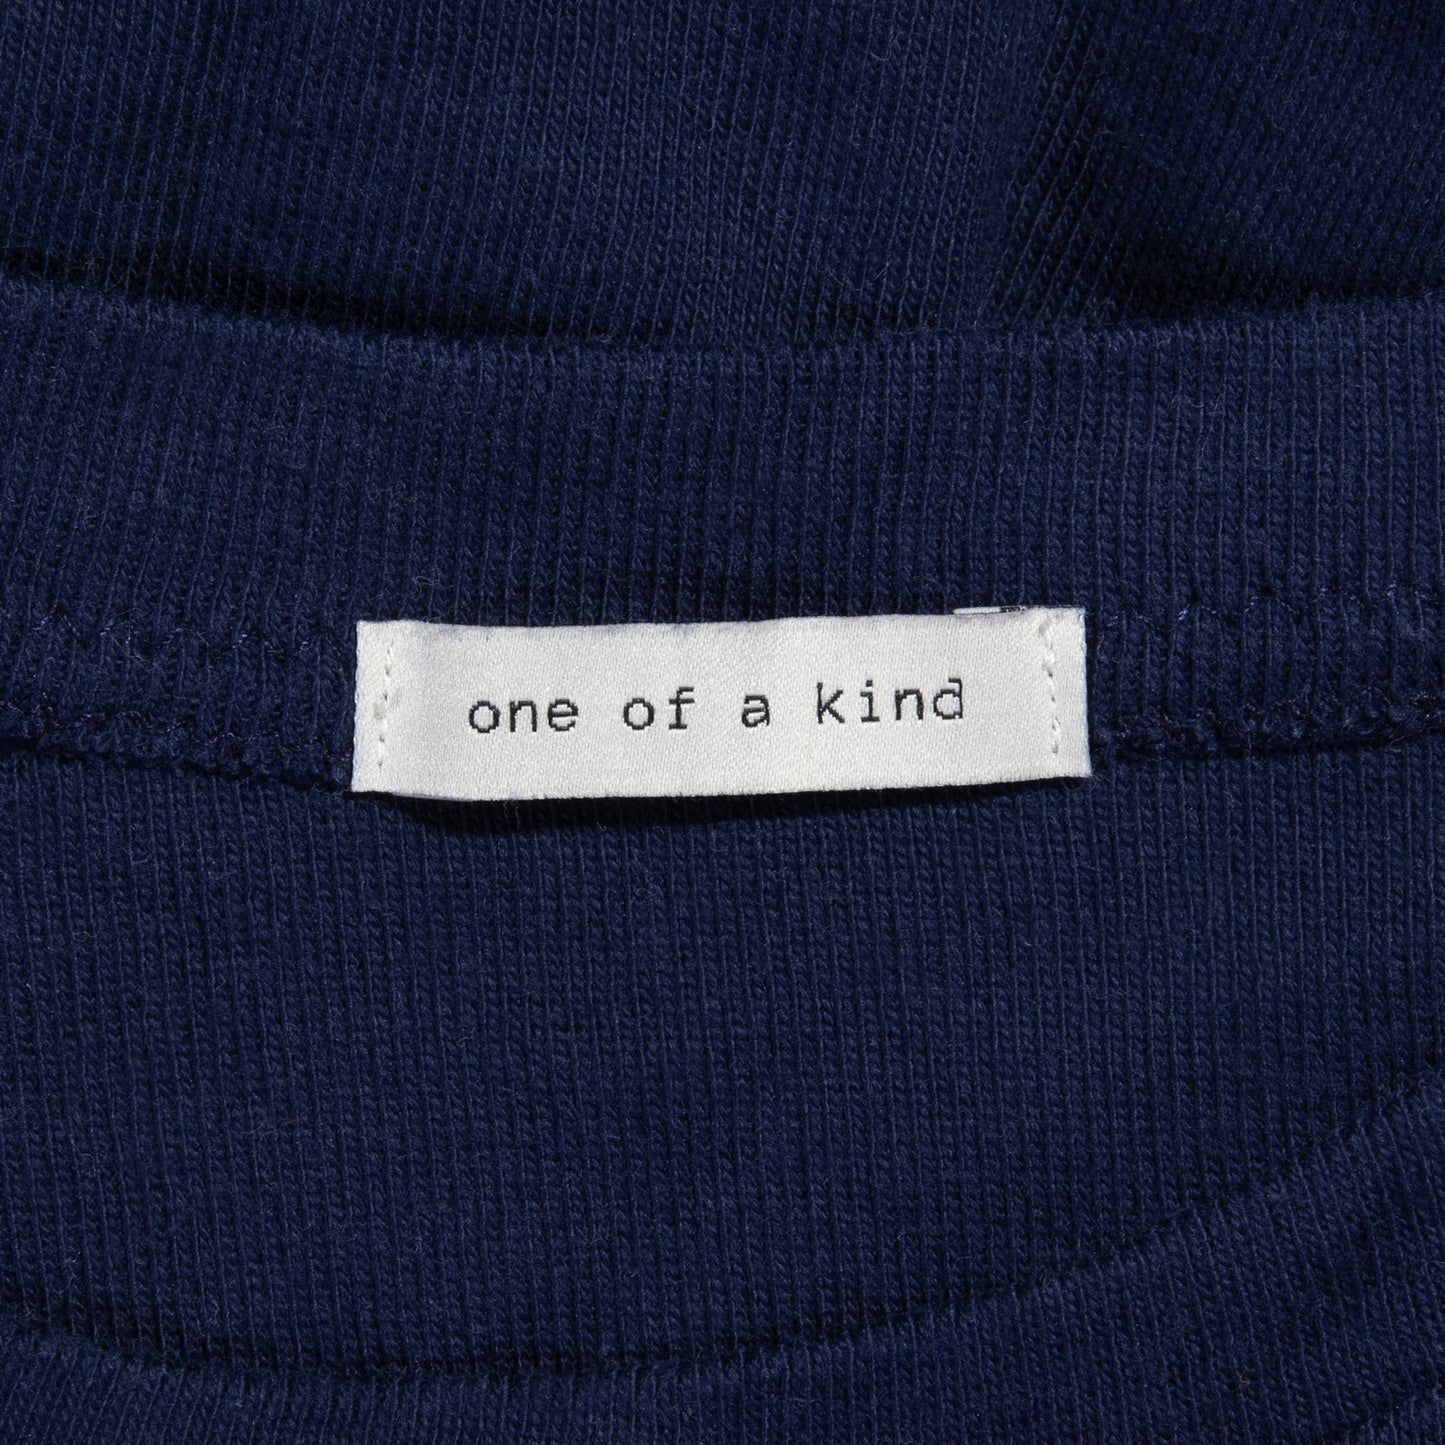 "One of a Kind" Labels - KATM